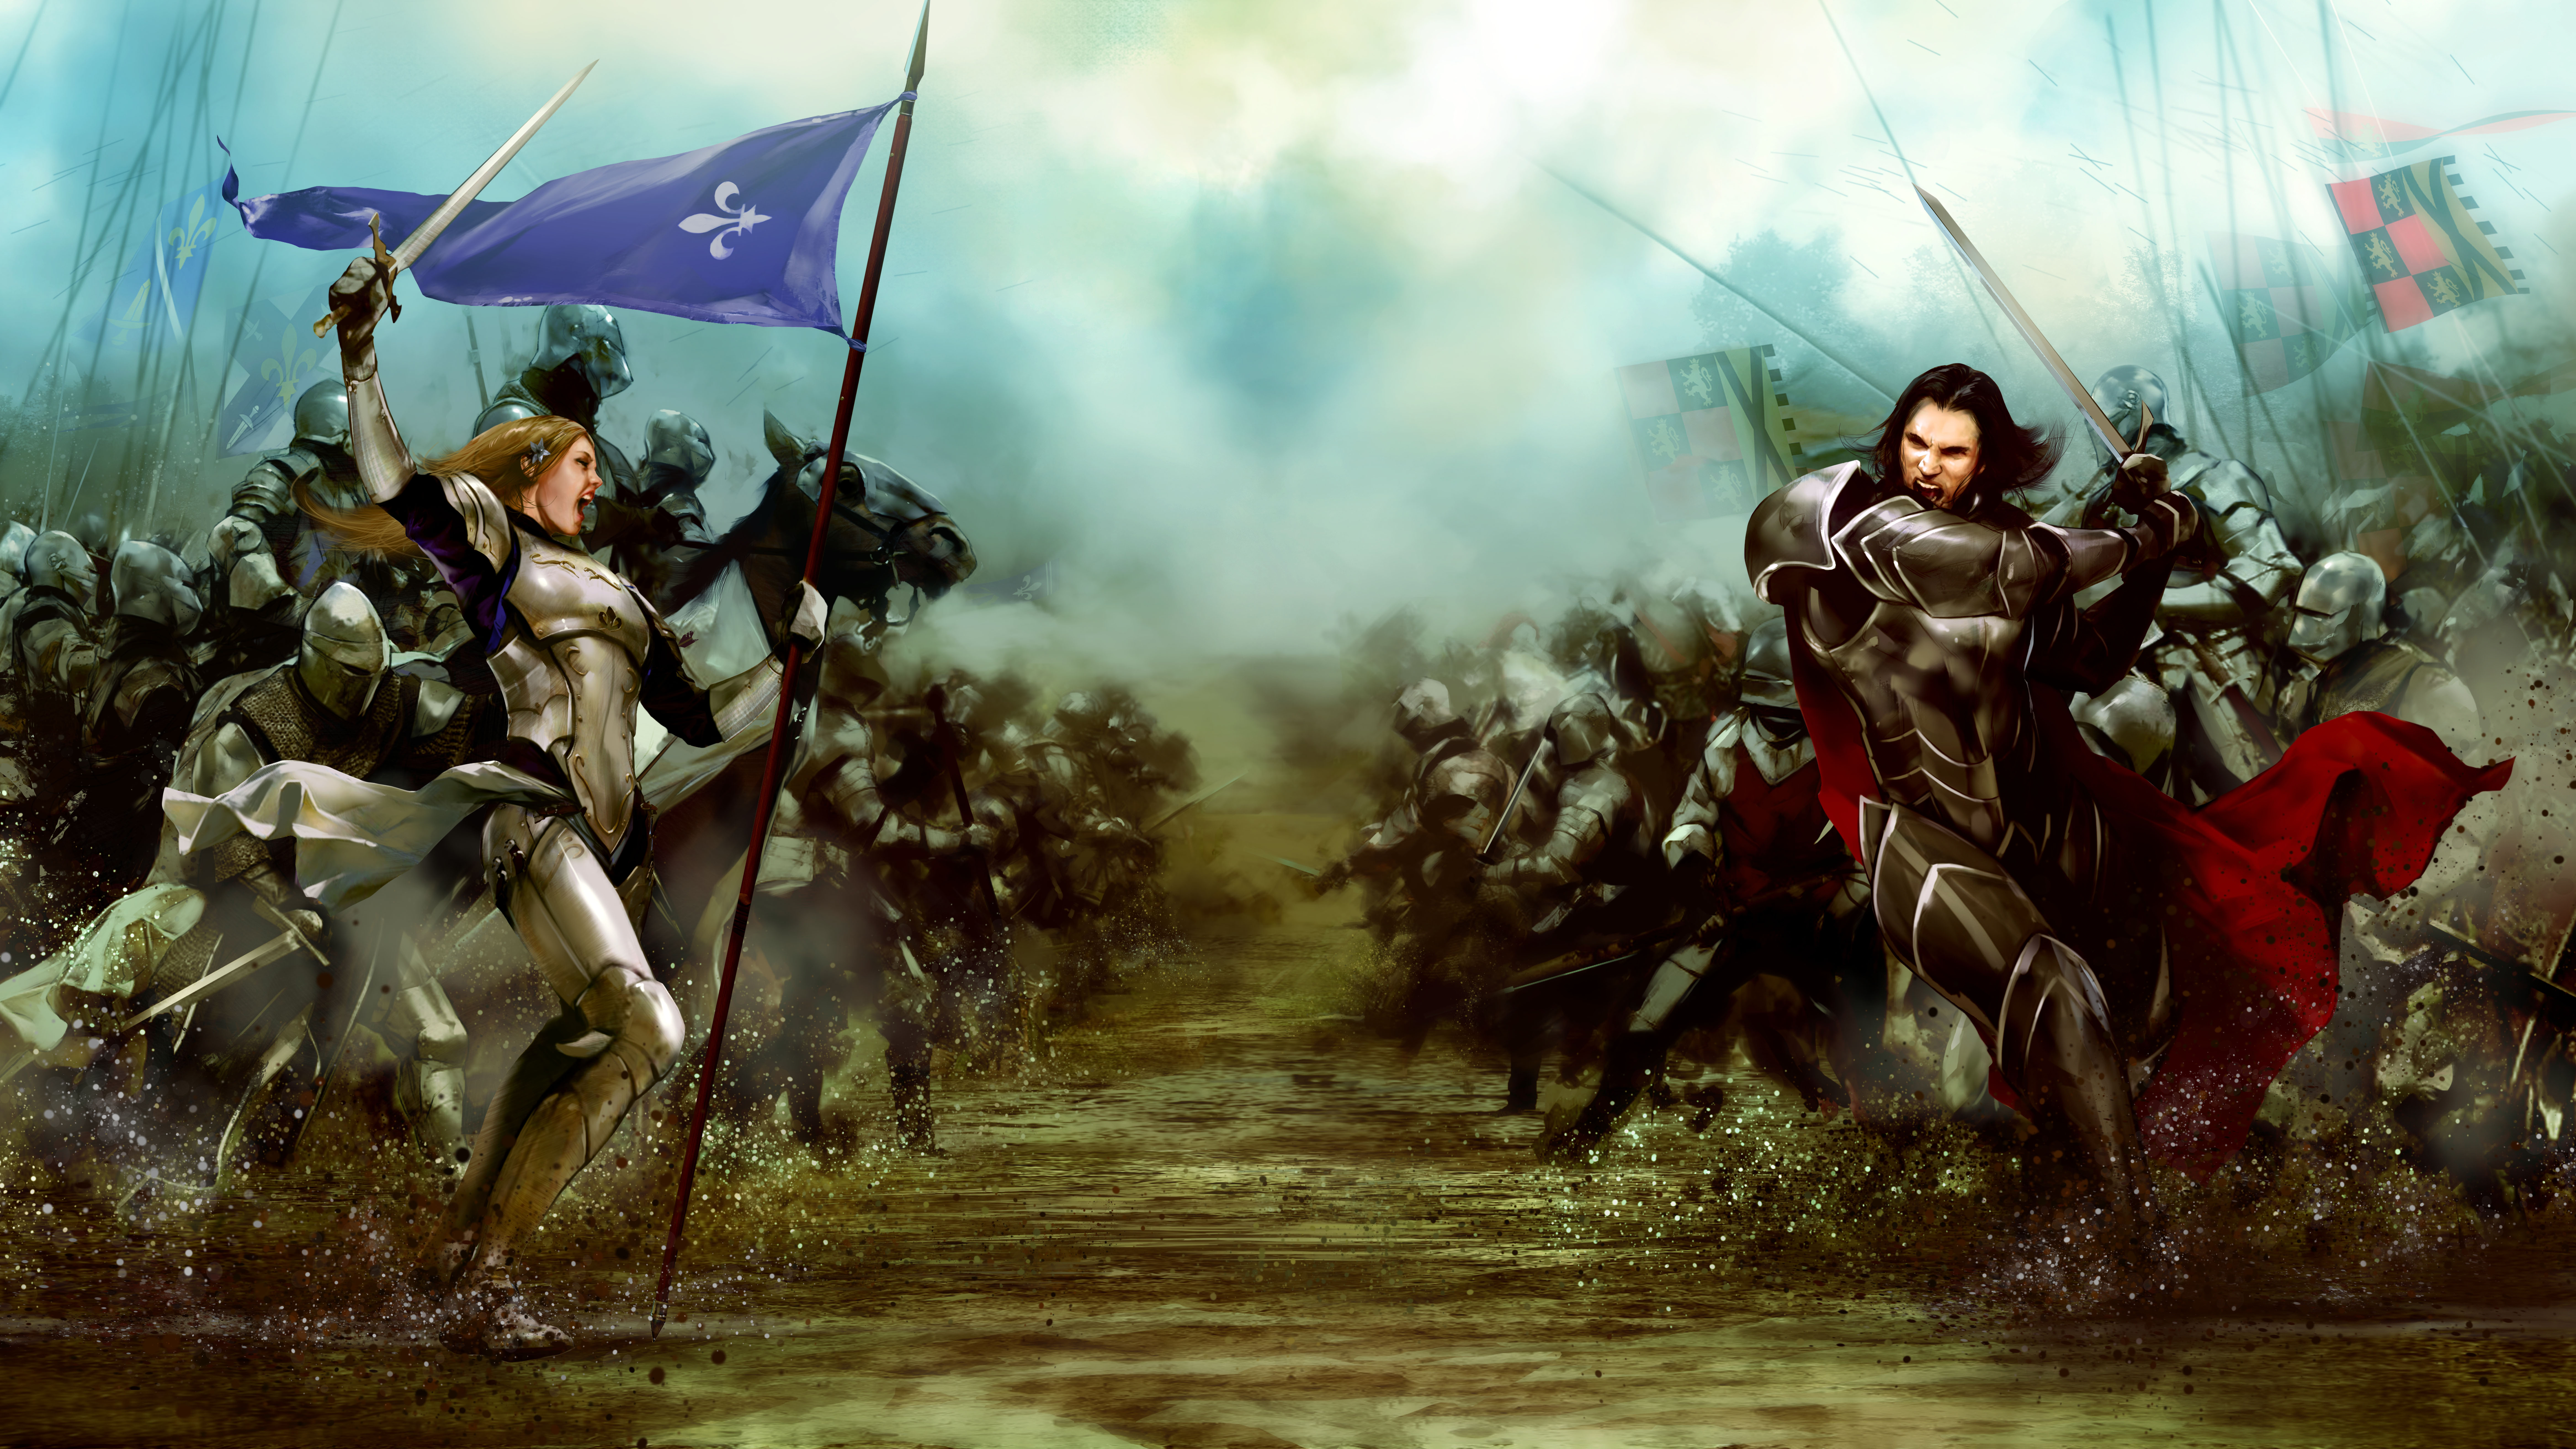 Armor Bladestorm The Hundred Years 039 War Knight Sword Video Game Warrior 9334x5250